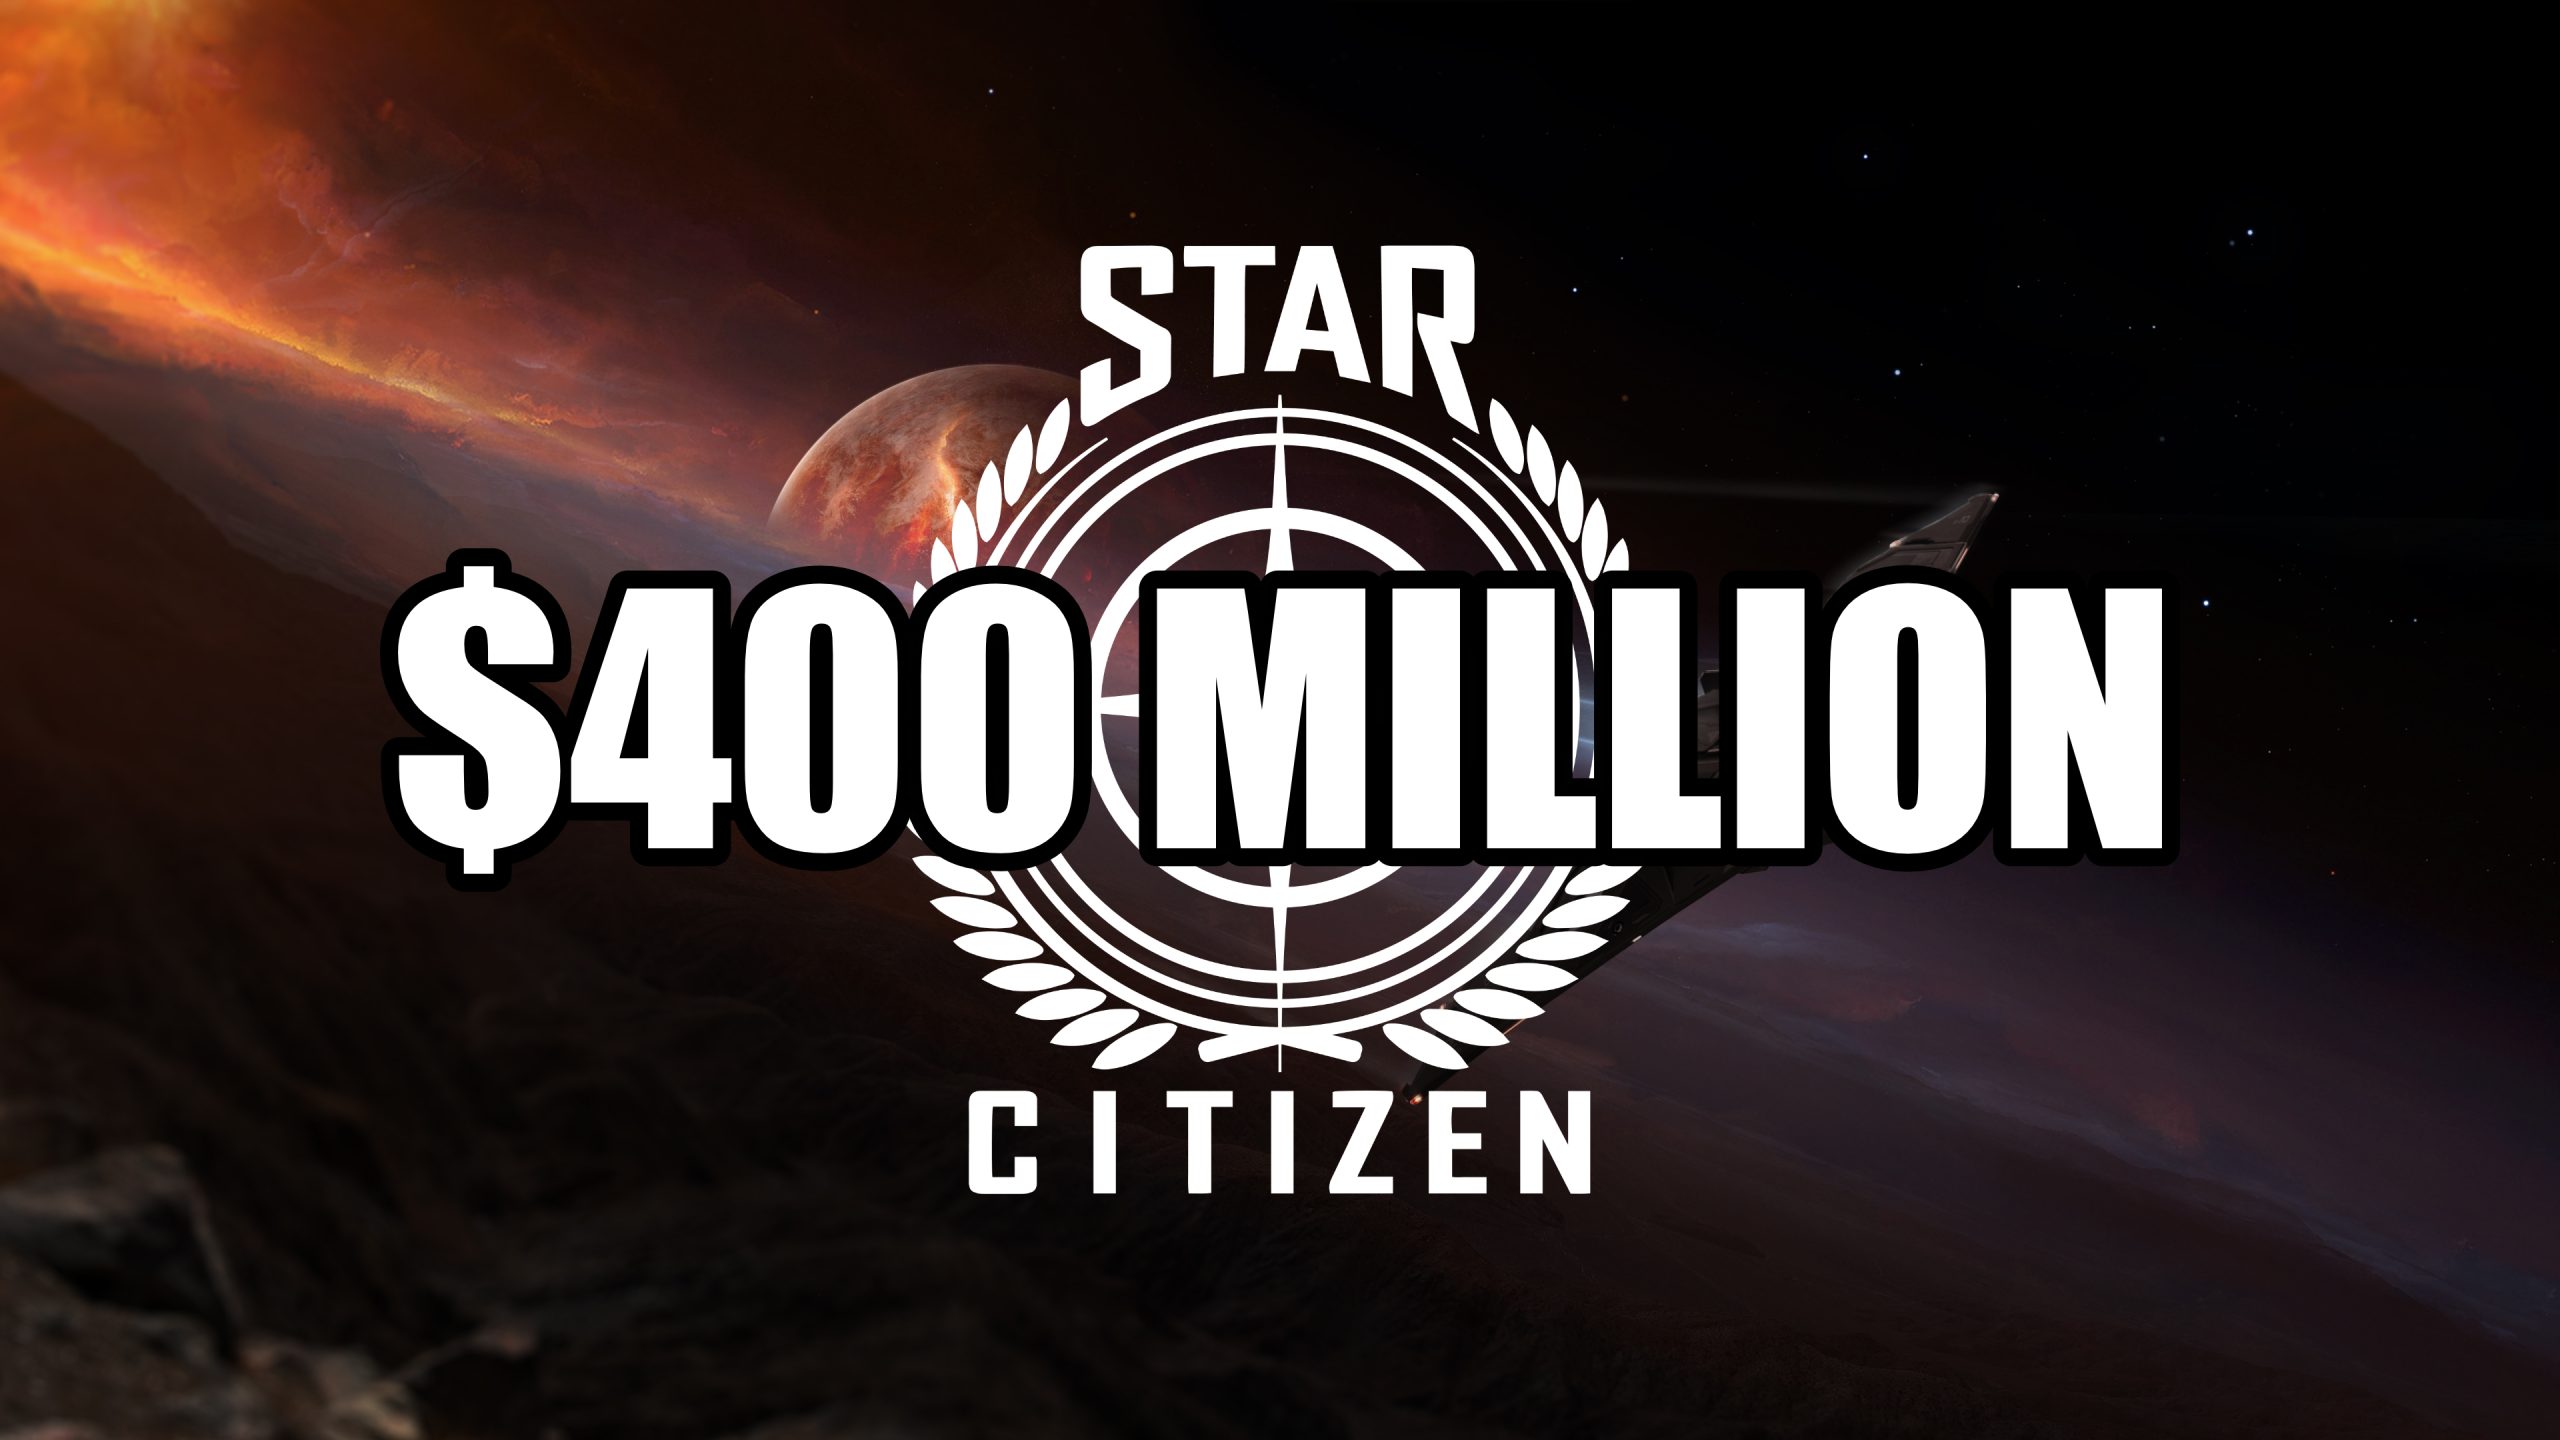 Star Citizen Site Has Now Raised Over Half A Billion Dollars